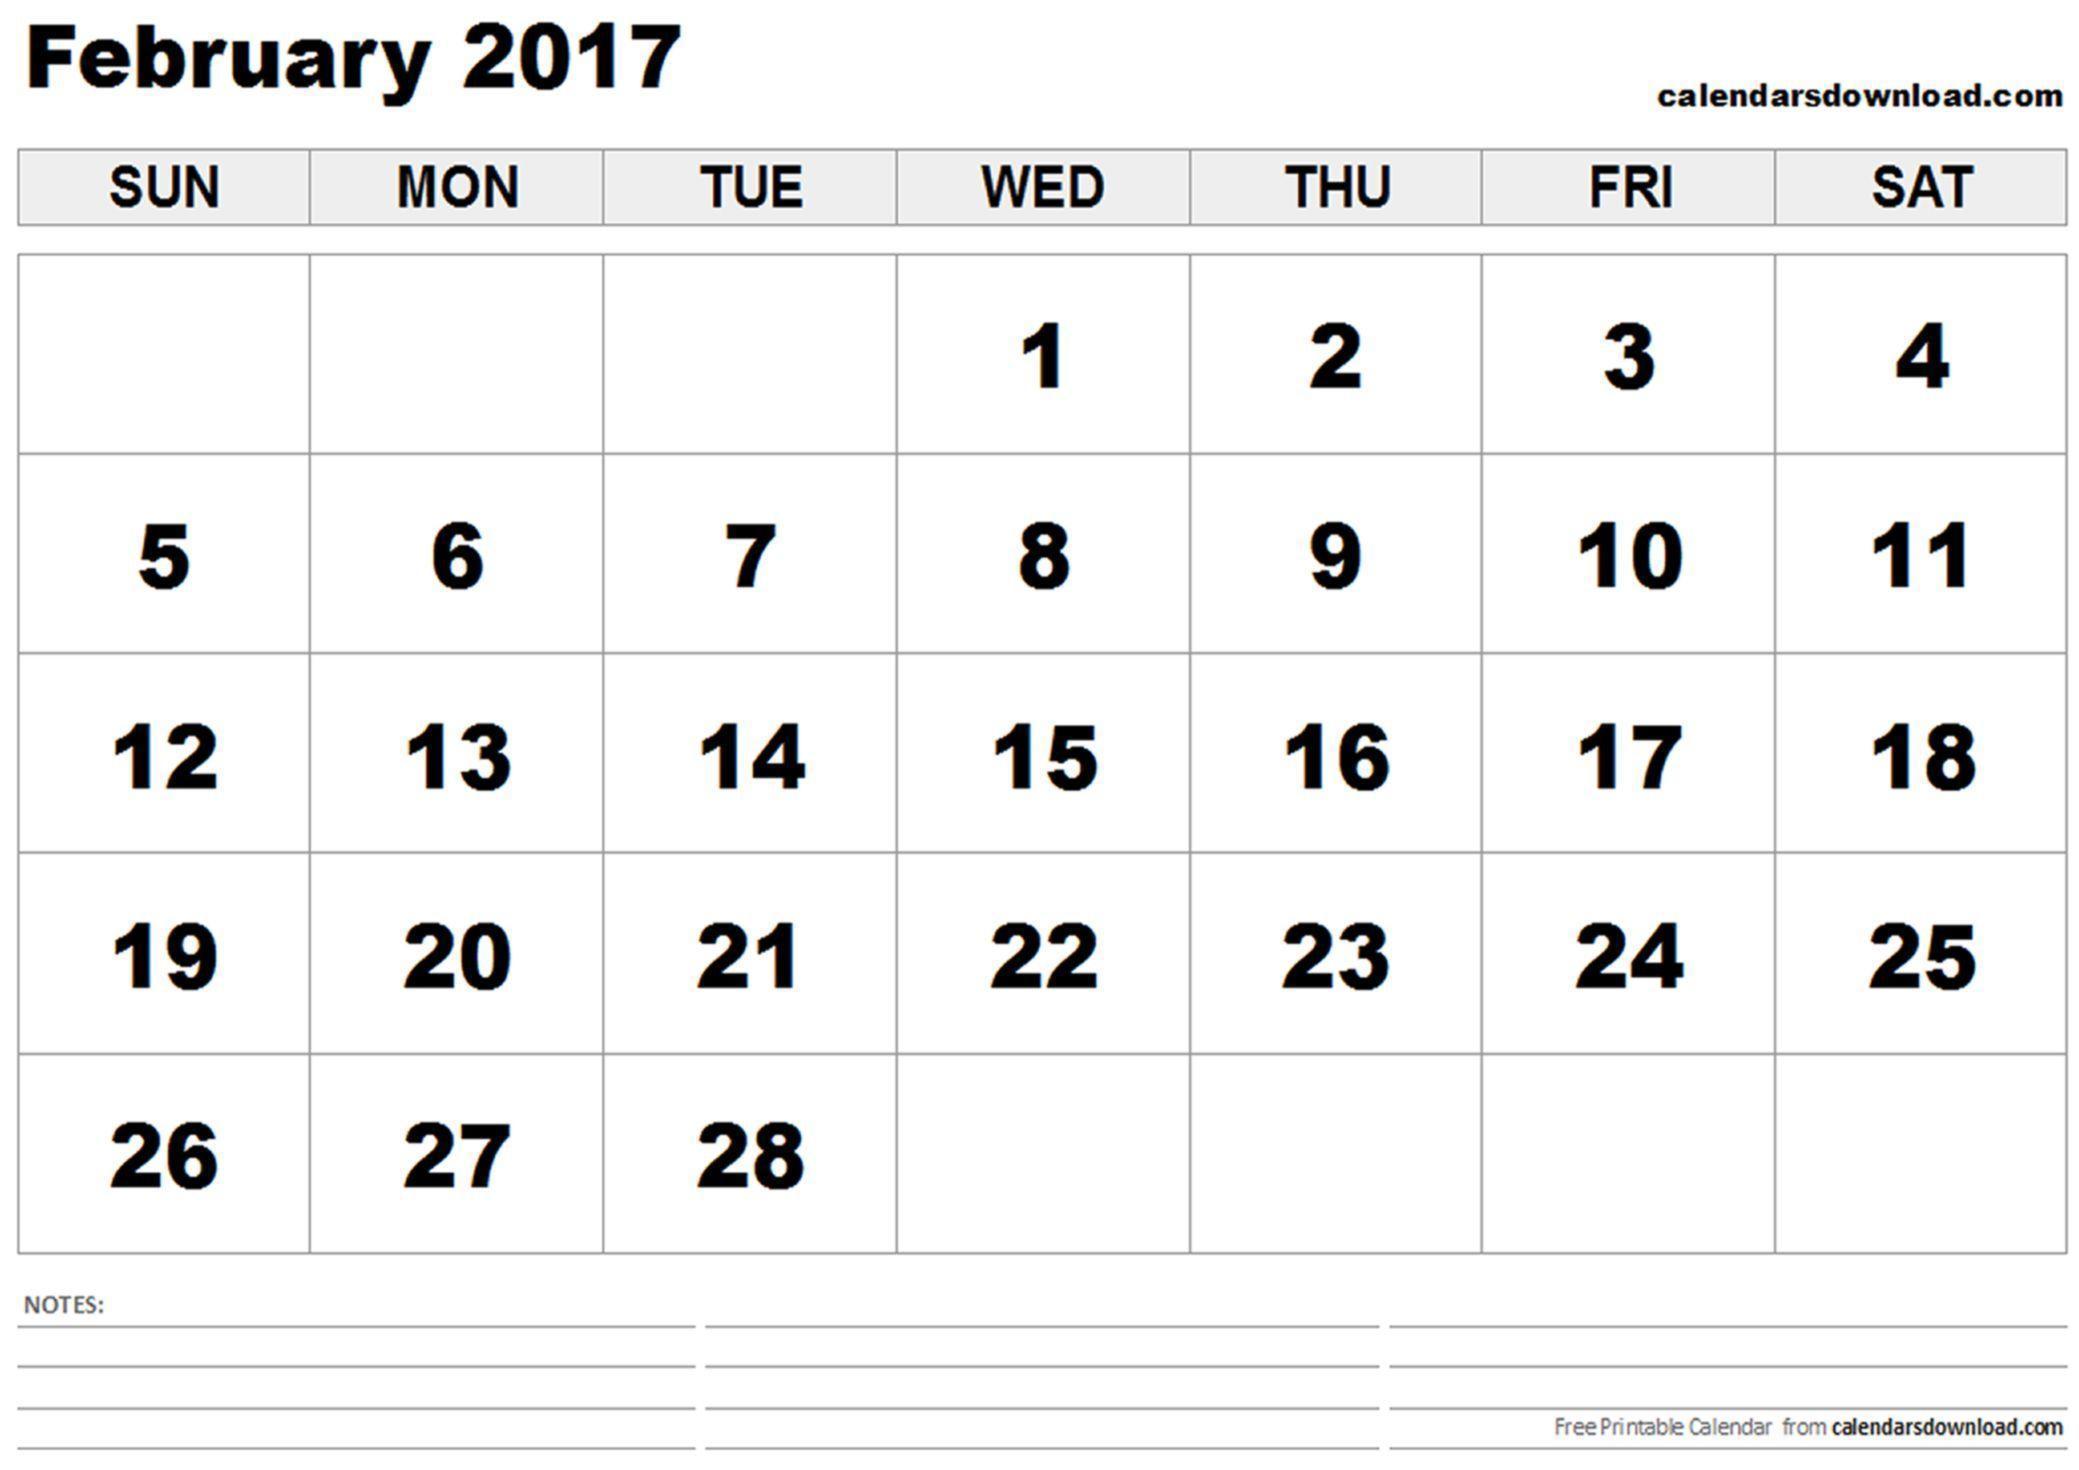 February 2017 Wallpapers Calendar - Wallpaper Cave